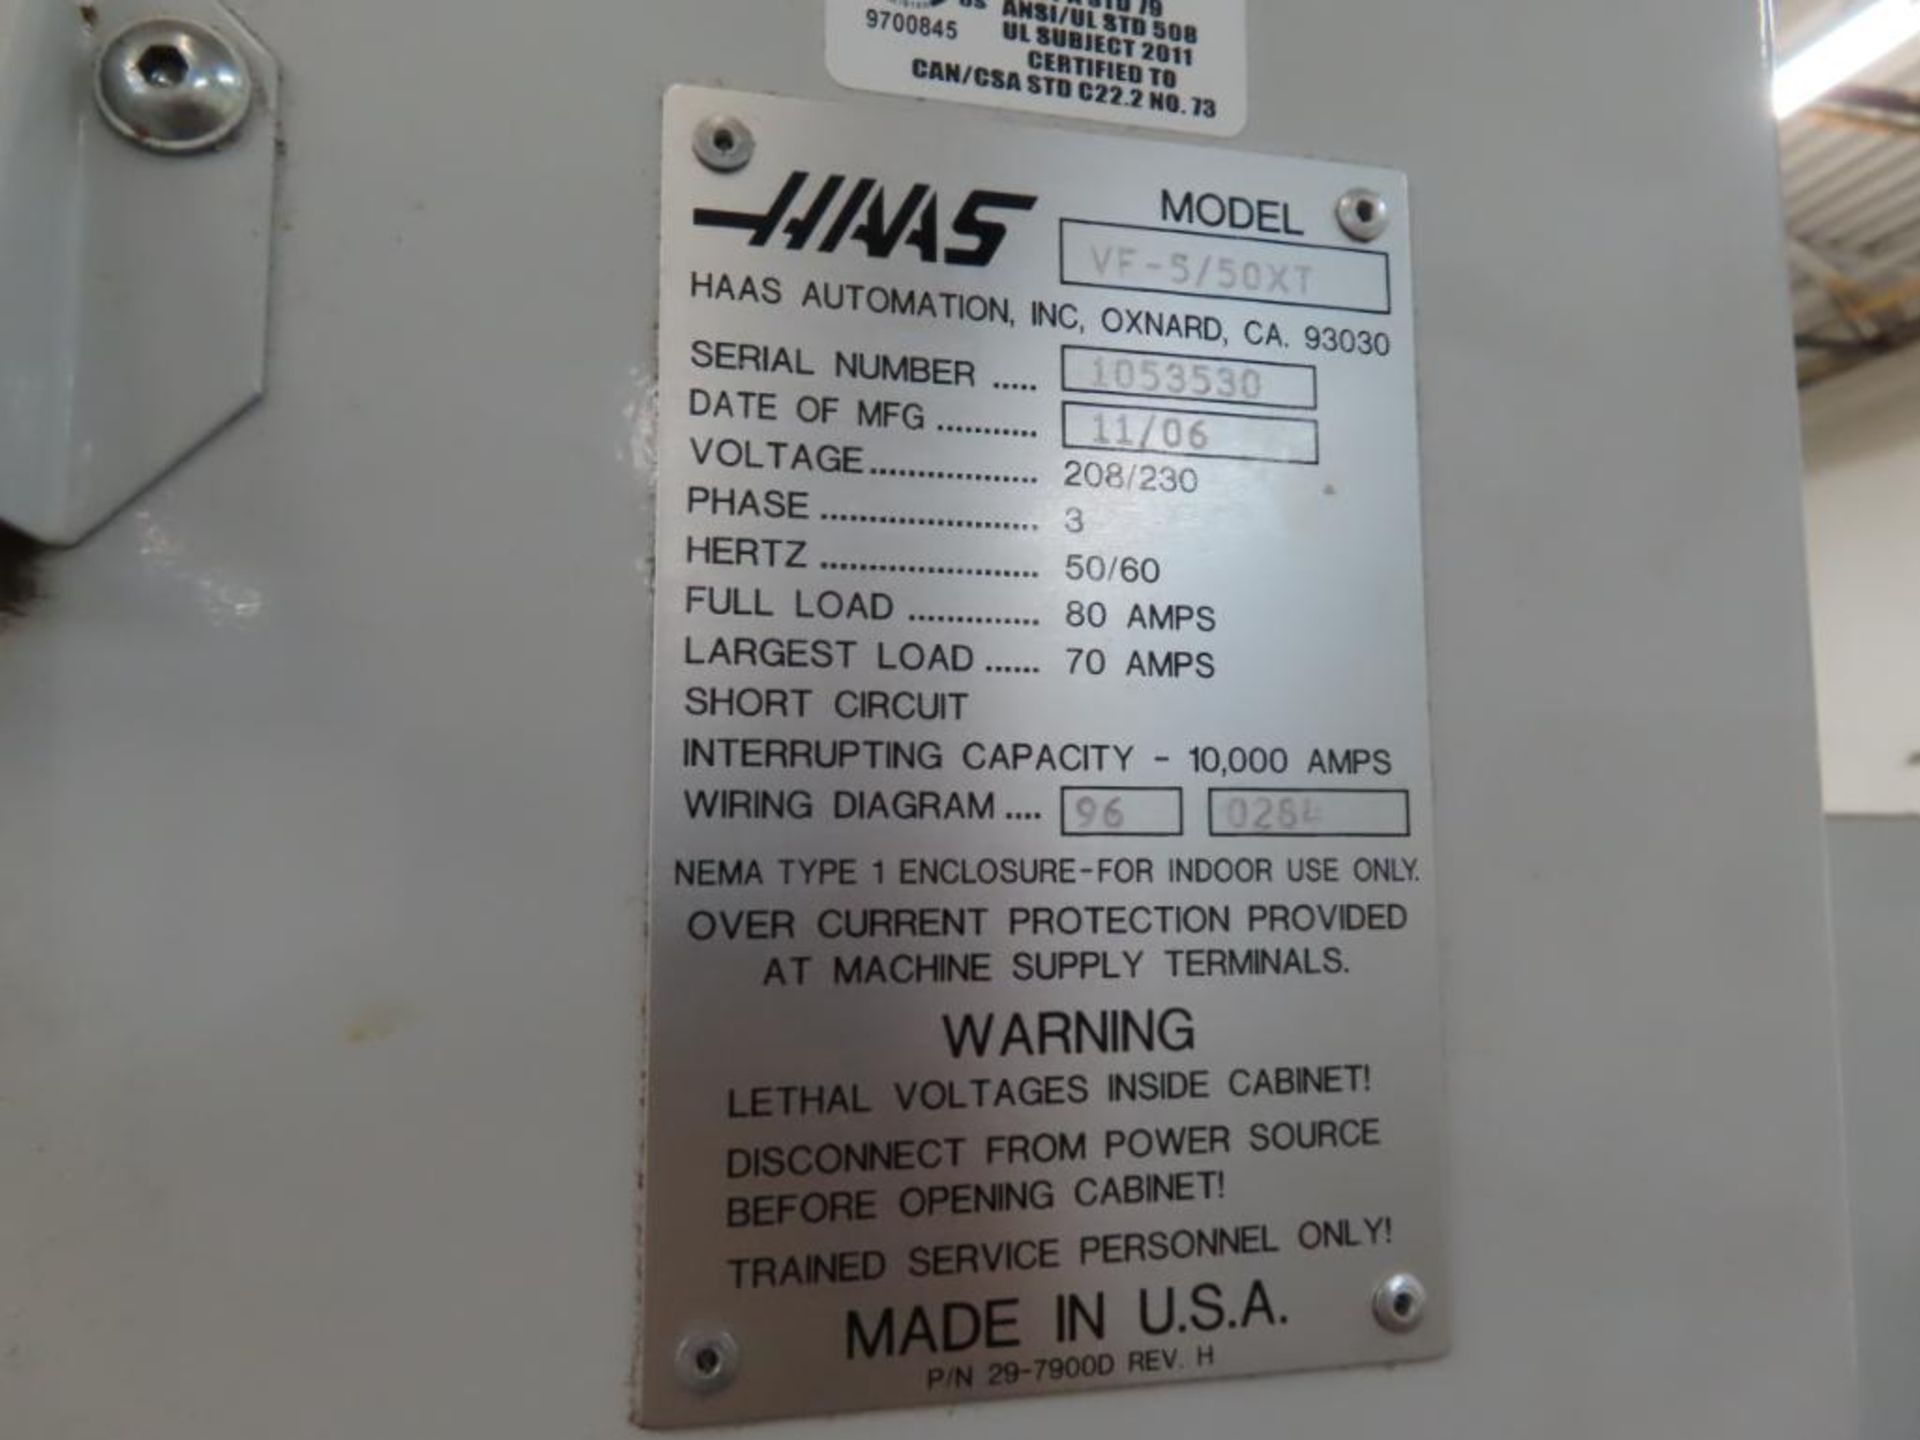 HAAS VF-5/50XT CNC VERT. MACHINING CENTER, S/N 1053530, 11/2006 - Image 9 of 9